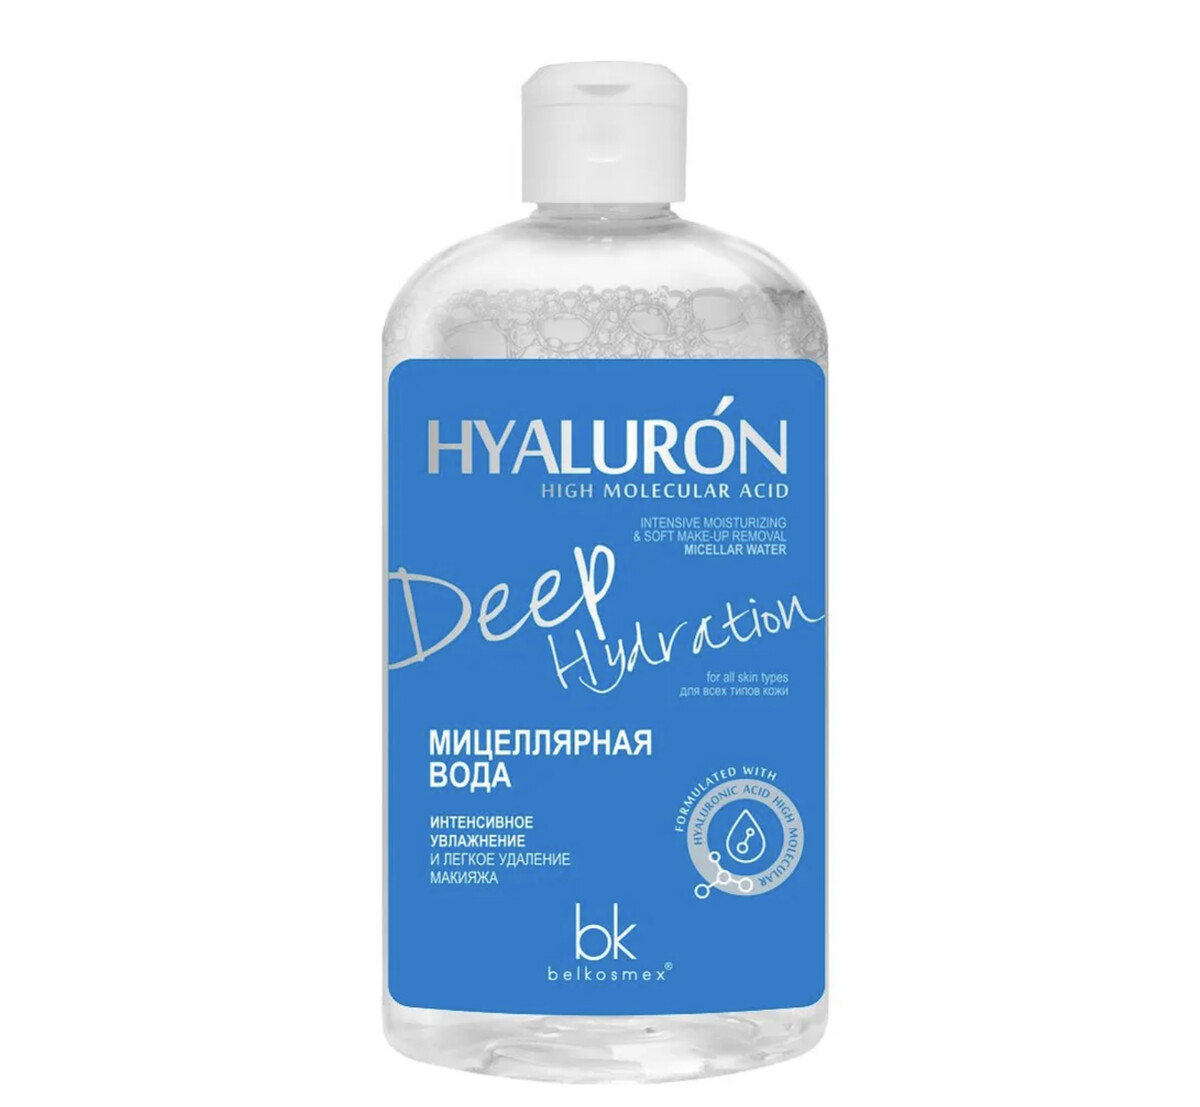 Hialuron deep hydration мицеллярная вода интенсивное увлажнение 500г relouis hydration